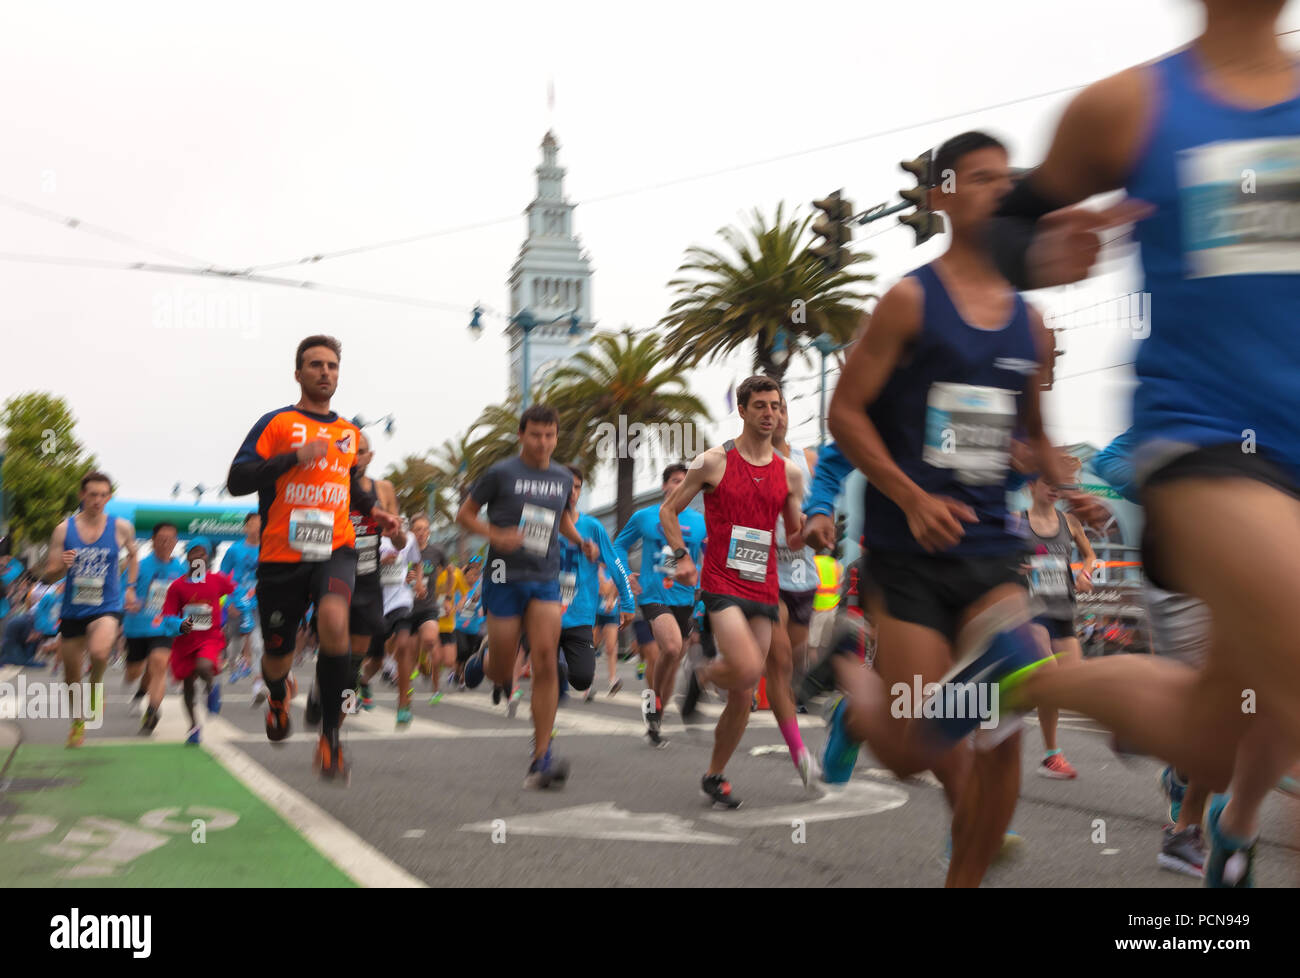 San francisco marathon hi-res stock photography and images - Alamy